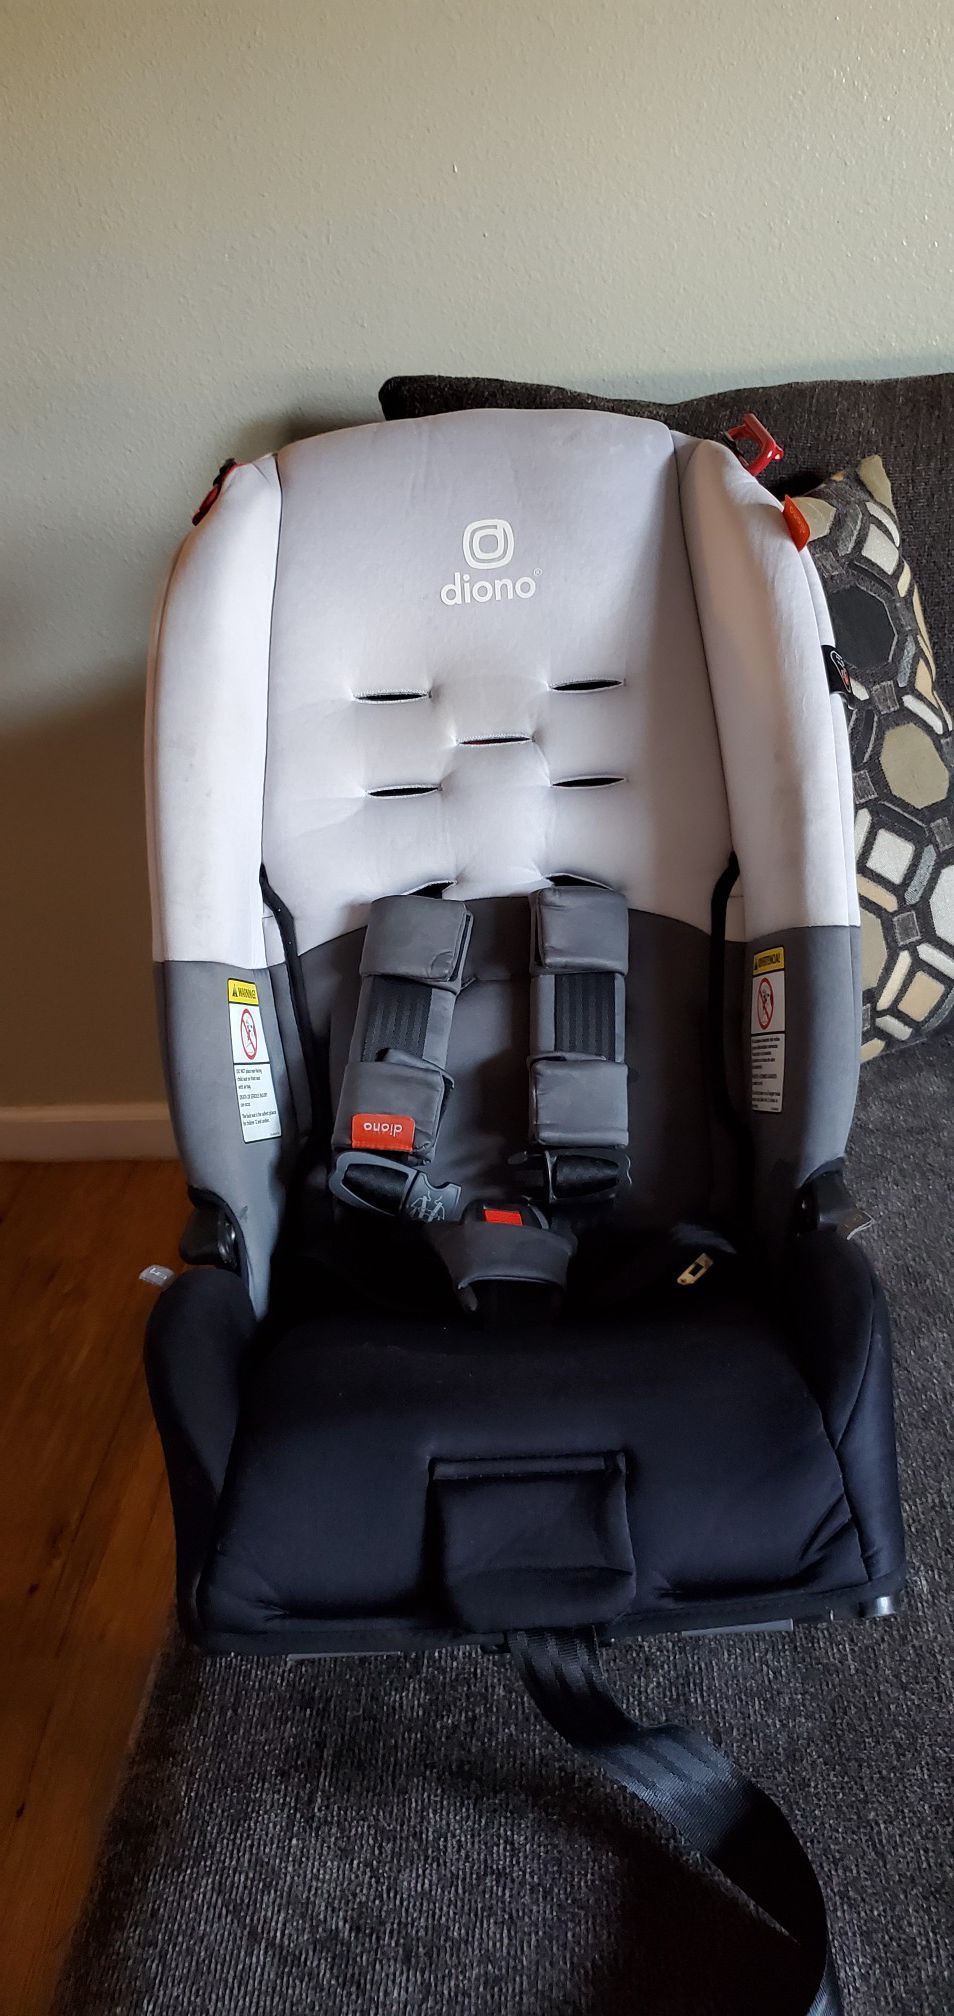 Diono convertible car seat $100